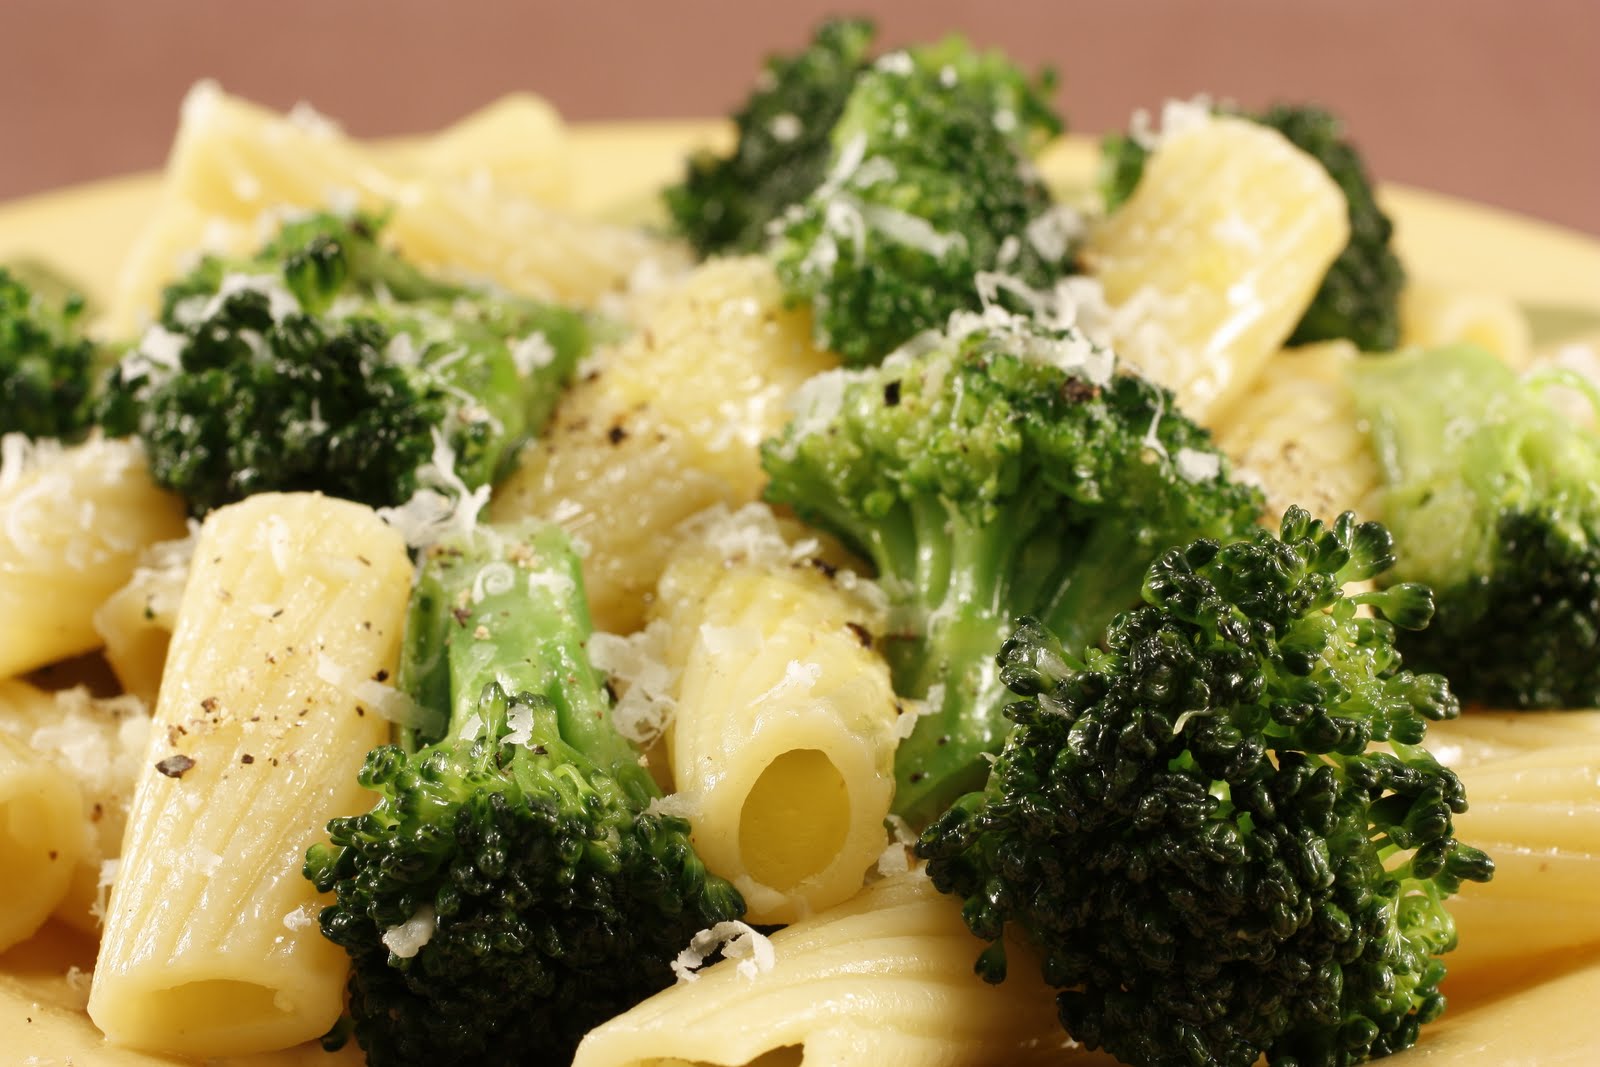 Pasta with Broccoli